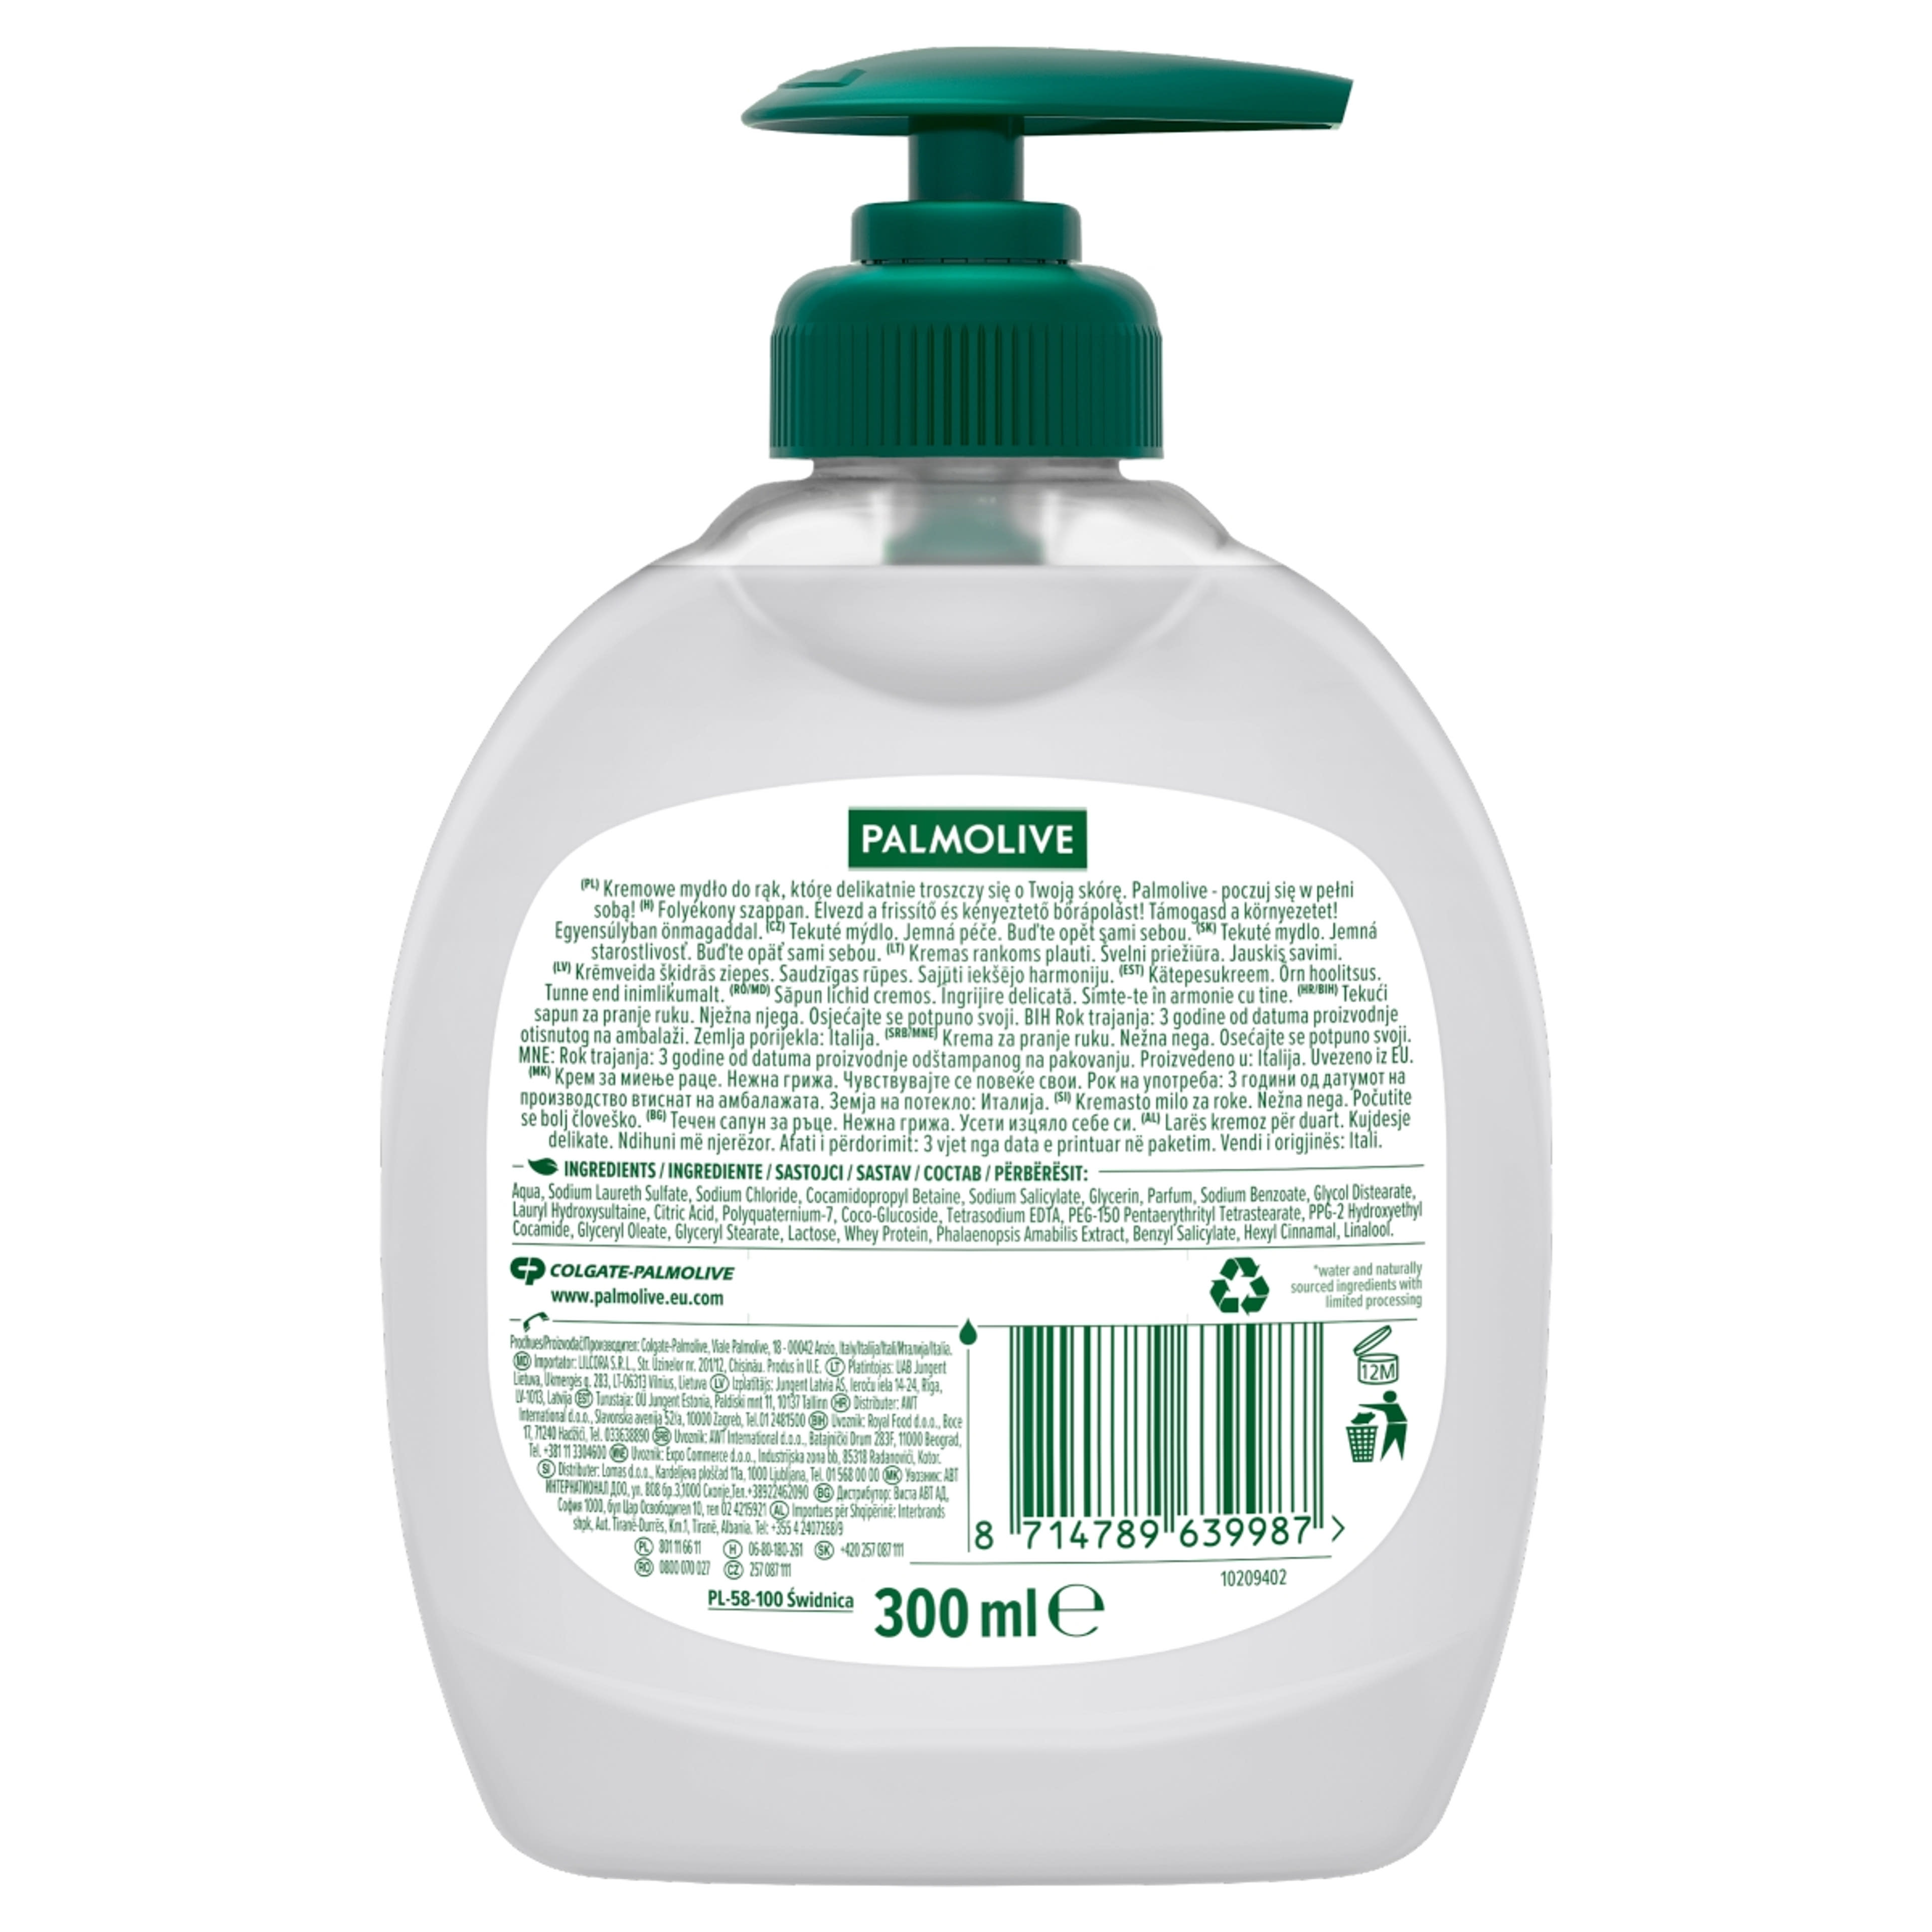 Palmolive Naturals Milk & Orchid folyékony szappan - 300 ml-3